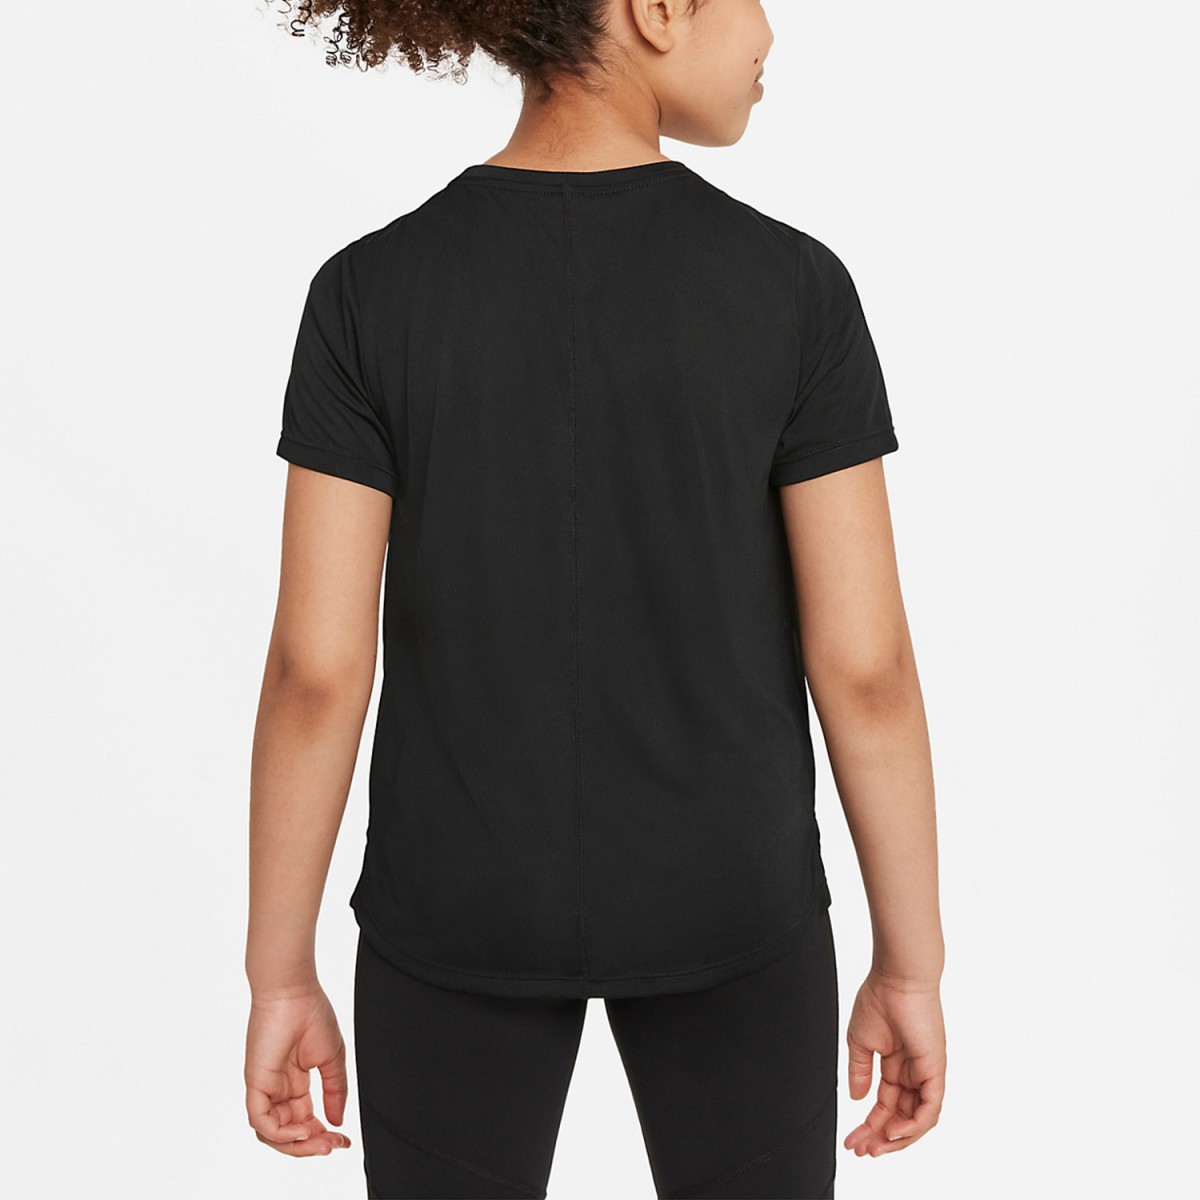 Тенісна футболка дитяча Nike One Short Sleeve Top GX black/white